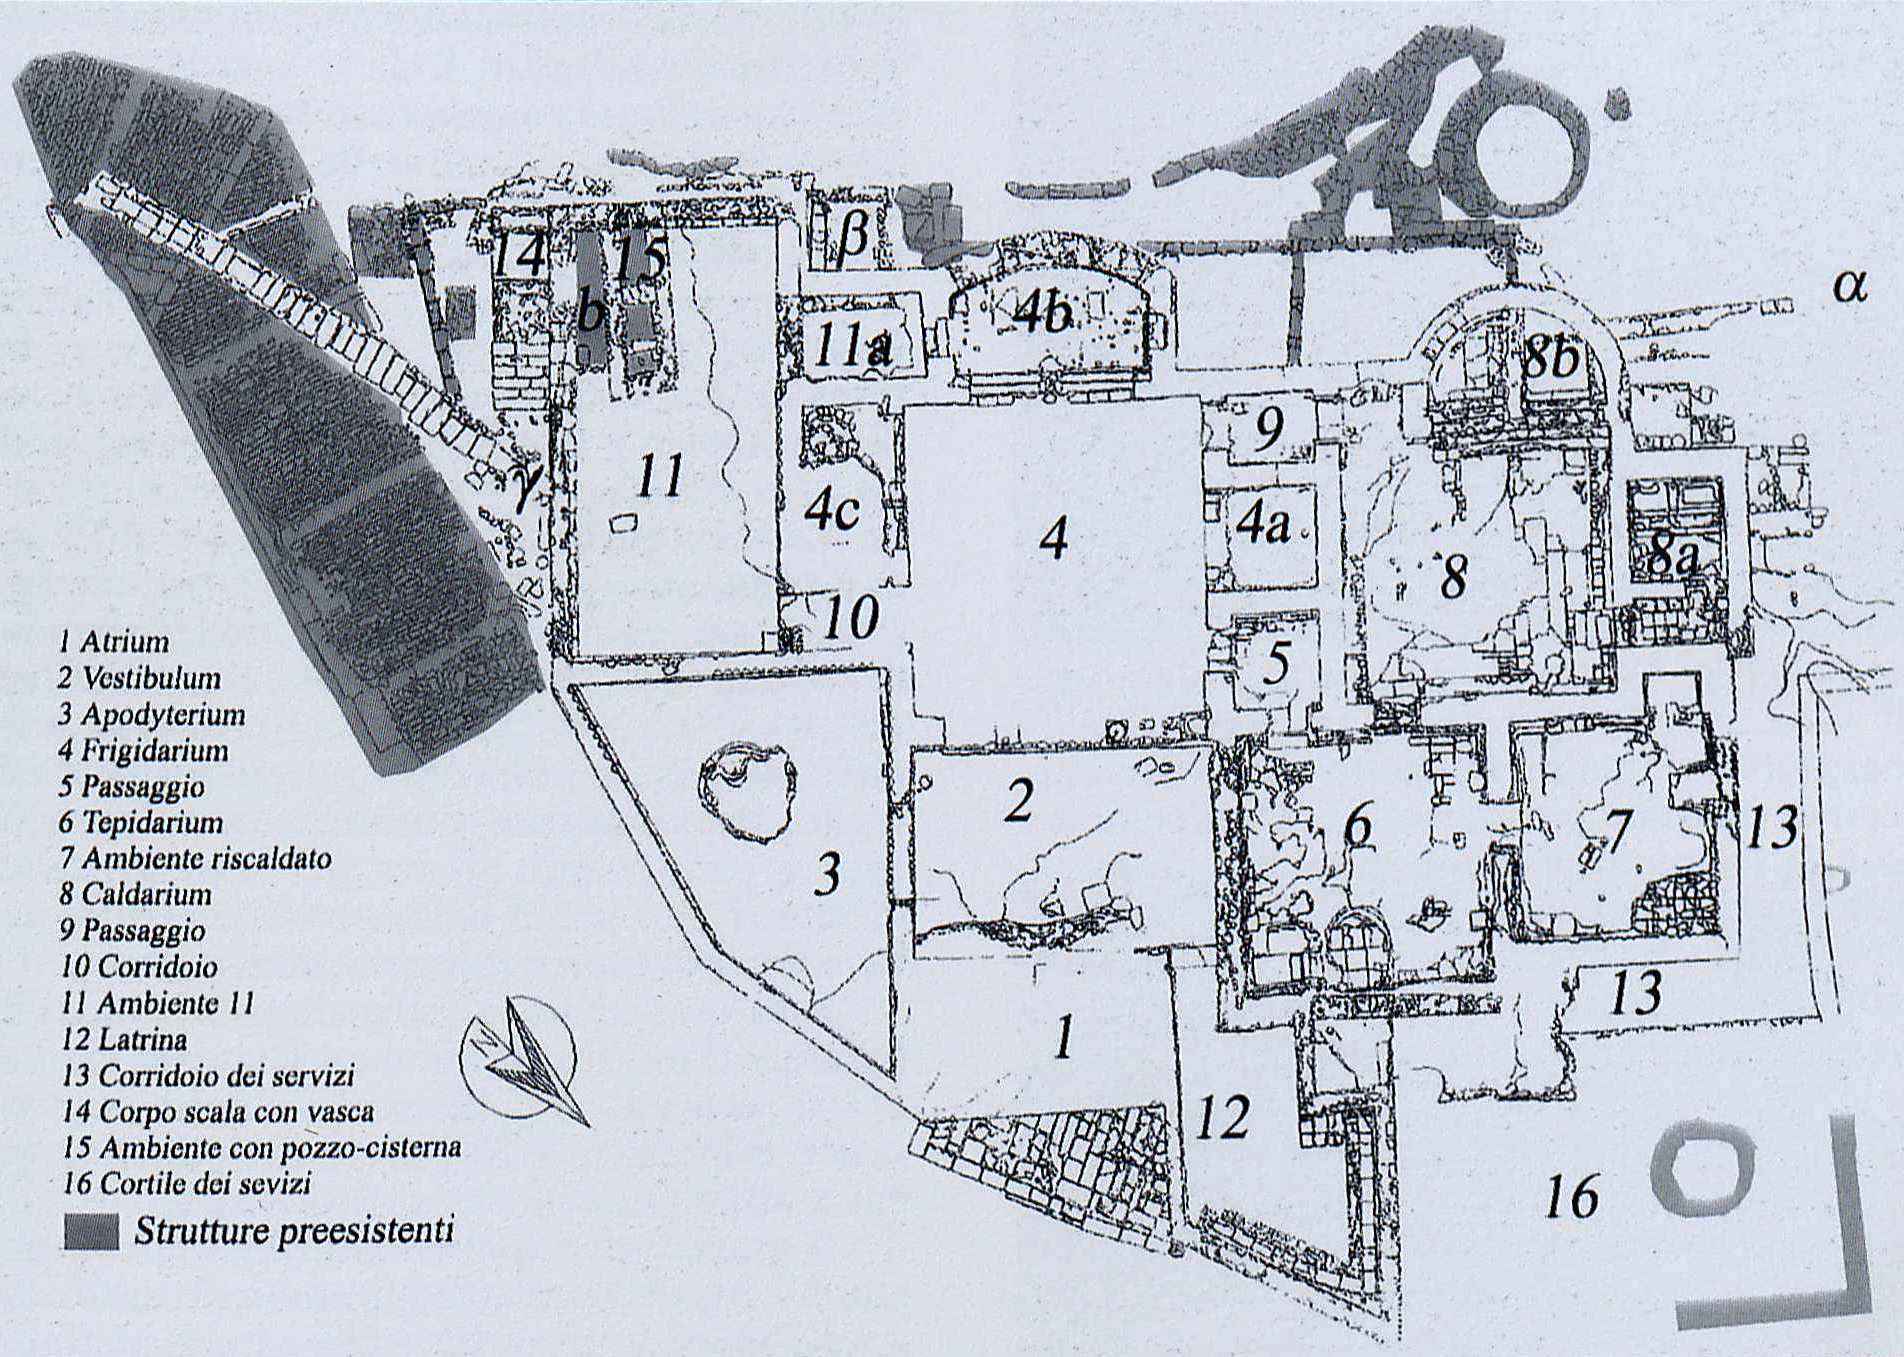 Terme romane, ingresso (impianto termale, luogo ad uso pubblico) - Ascea (SA)  (II sec. d.C)